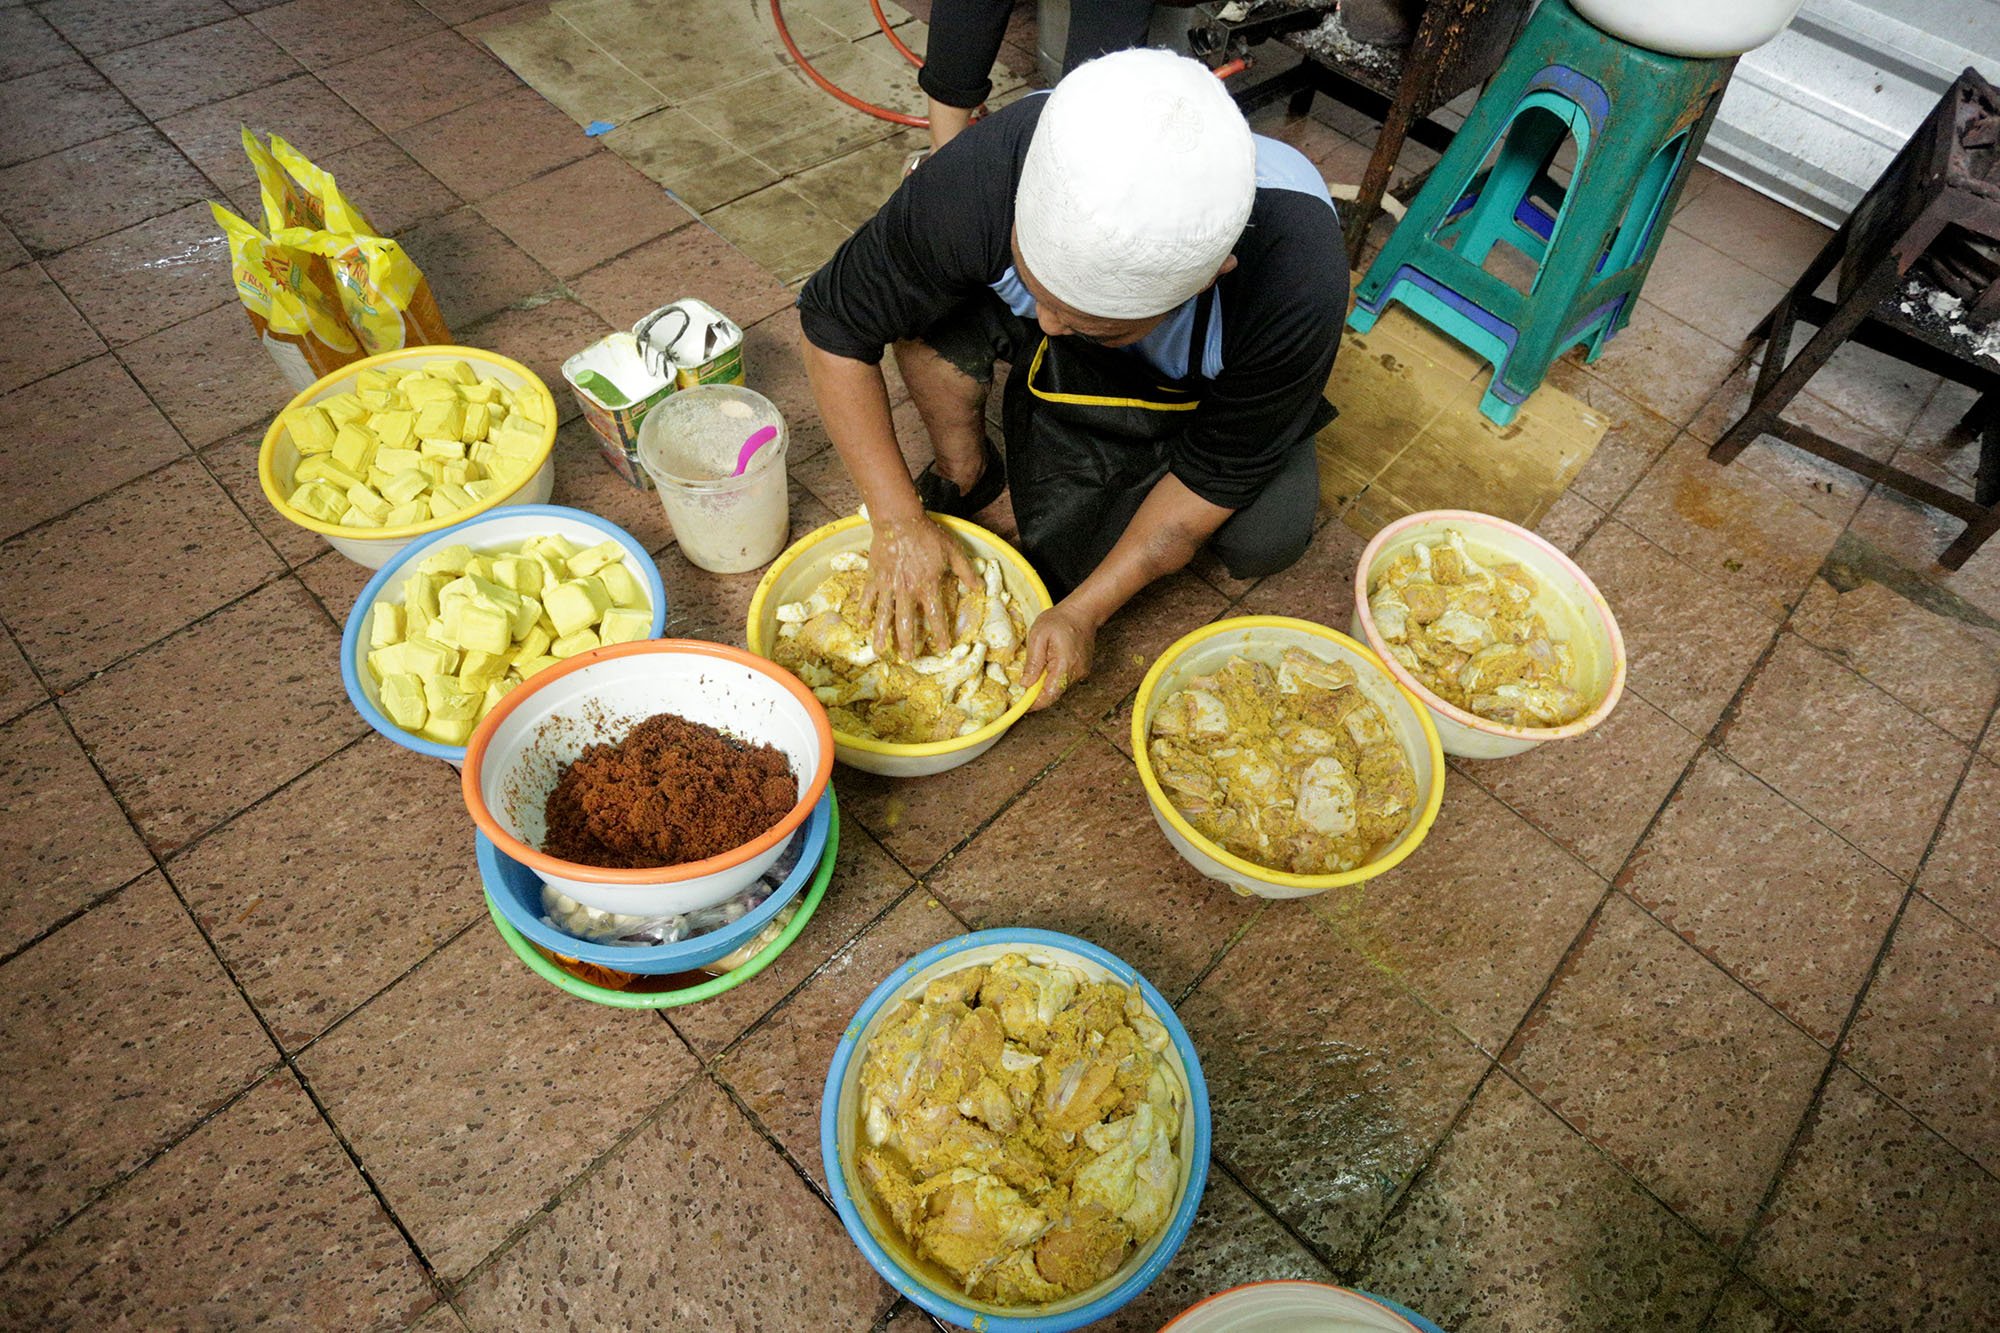 Seorang warga nampak sibuk menyiapkan makanan berbuka bagi jamaah yang akan berbuka puasa hari pertama di Masjid Istiqlal, Jakarta, Senin (7/5). Perharinya kurang lebih tiga ribuan nasi kotak disiapkan untuk jamaah yang buka puasa di Istiqlal.